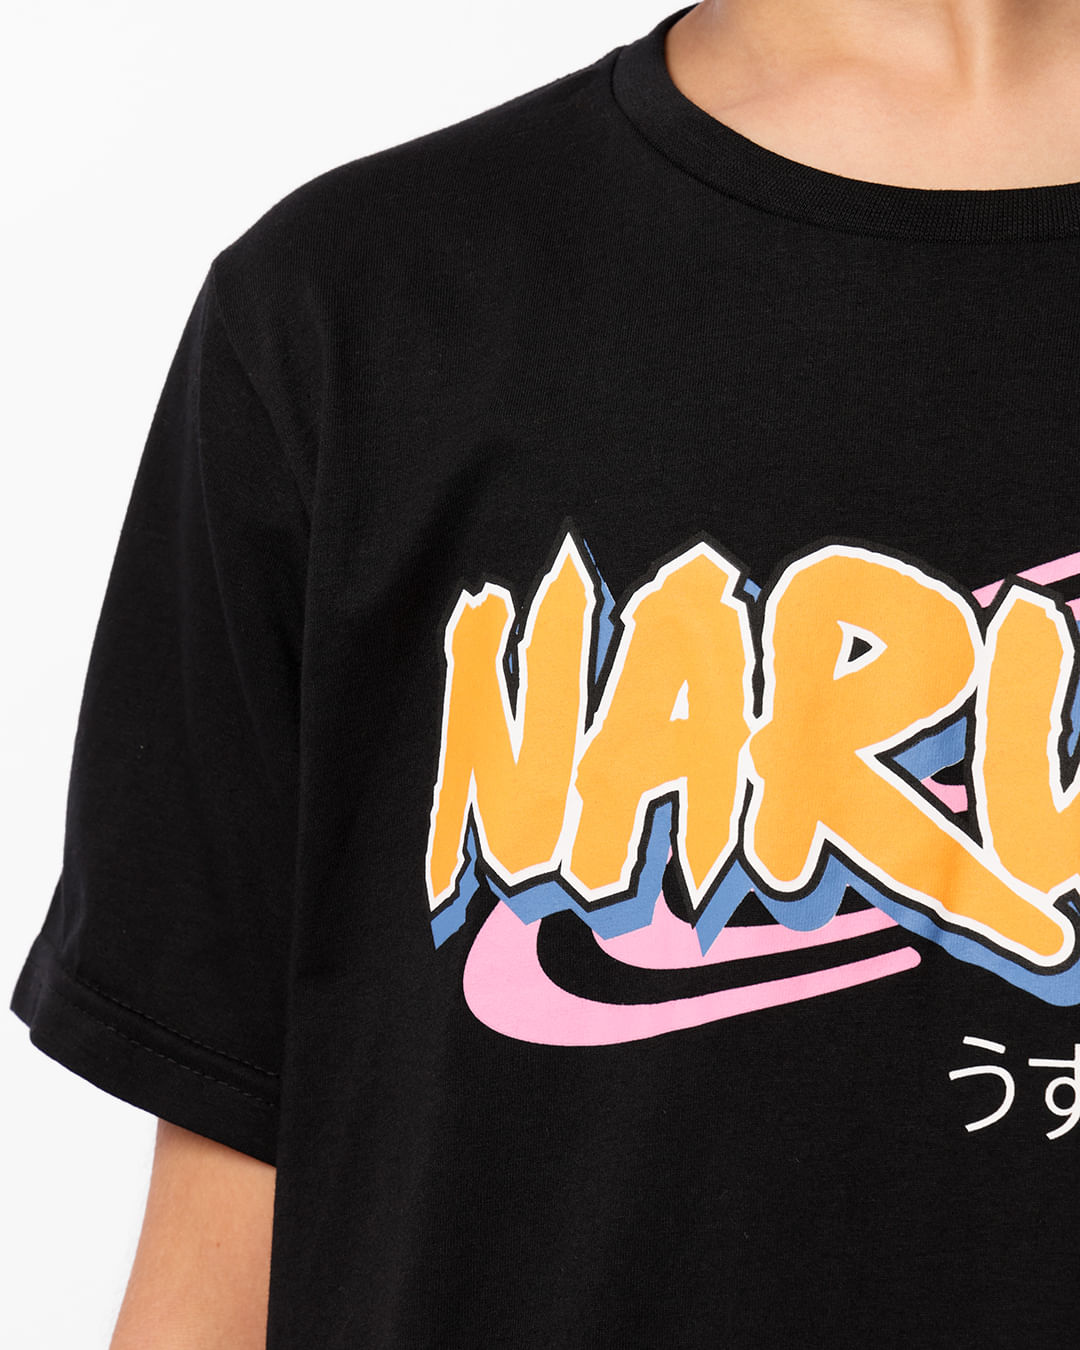 Camiseta-Juvenil-Manga-Curta-com-Estampa-Naruto-Preta